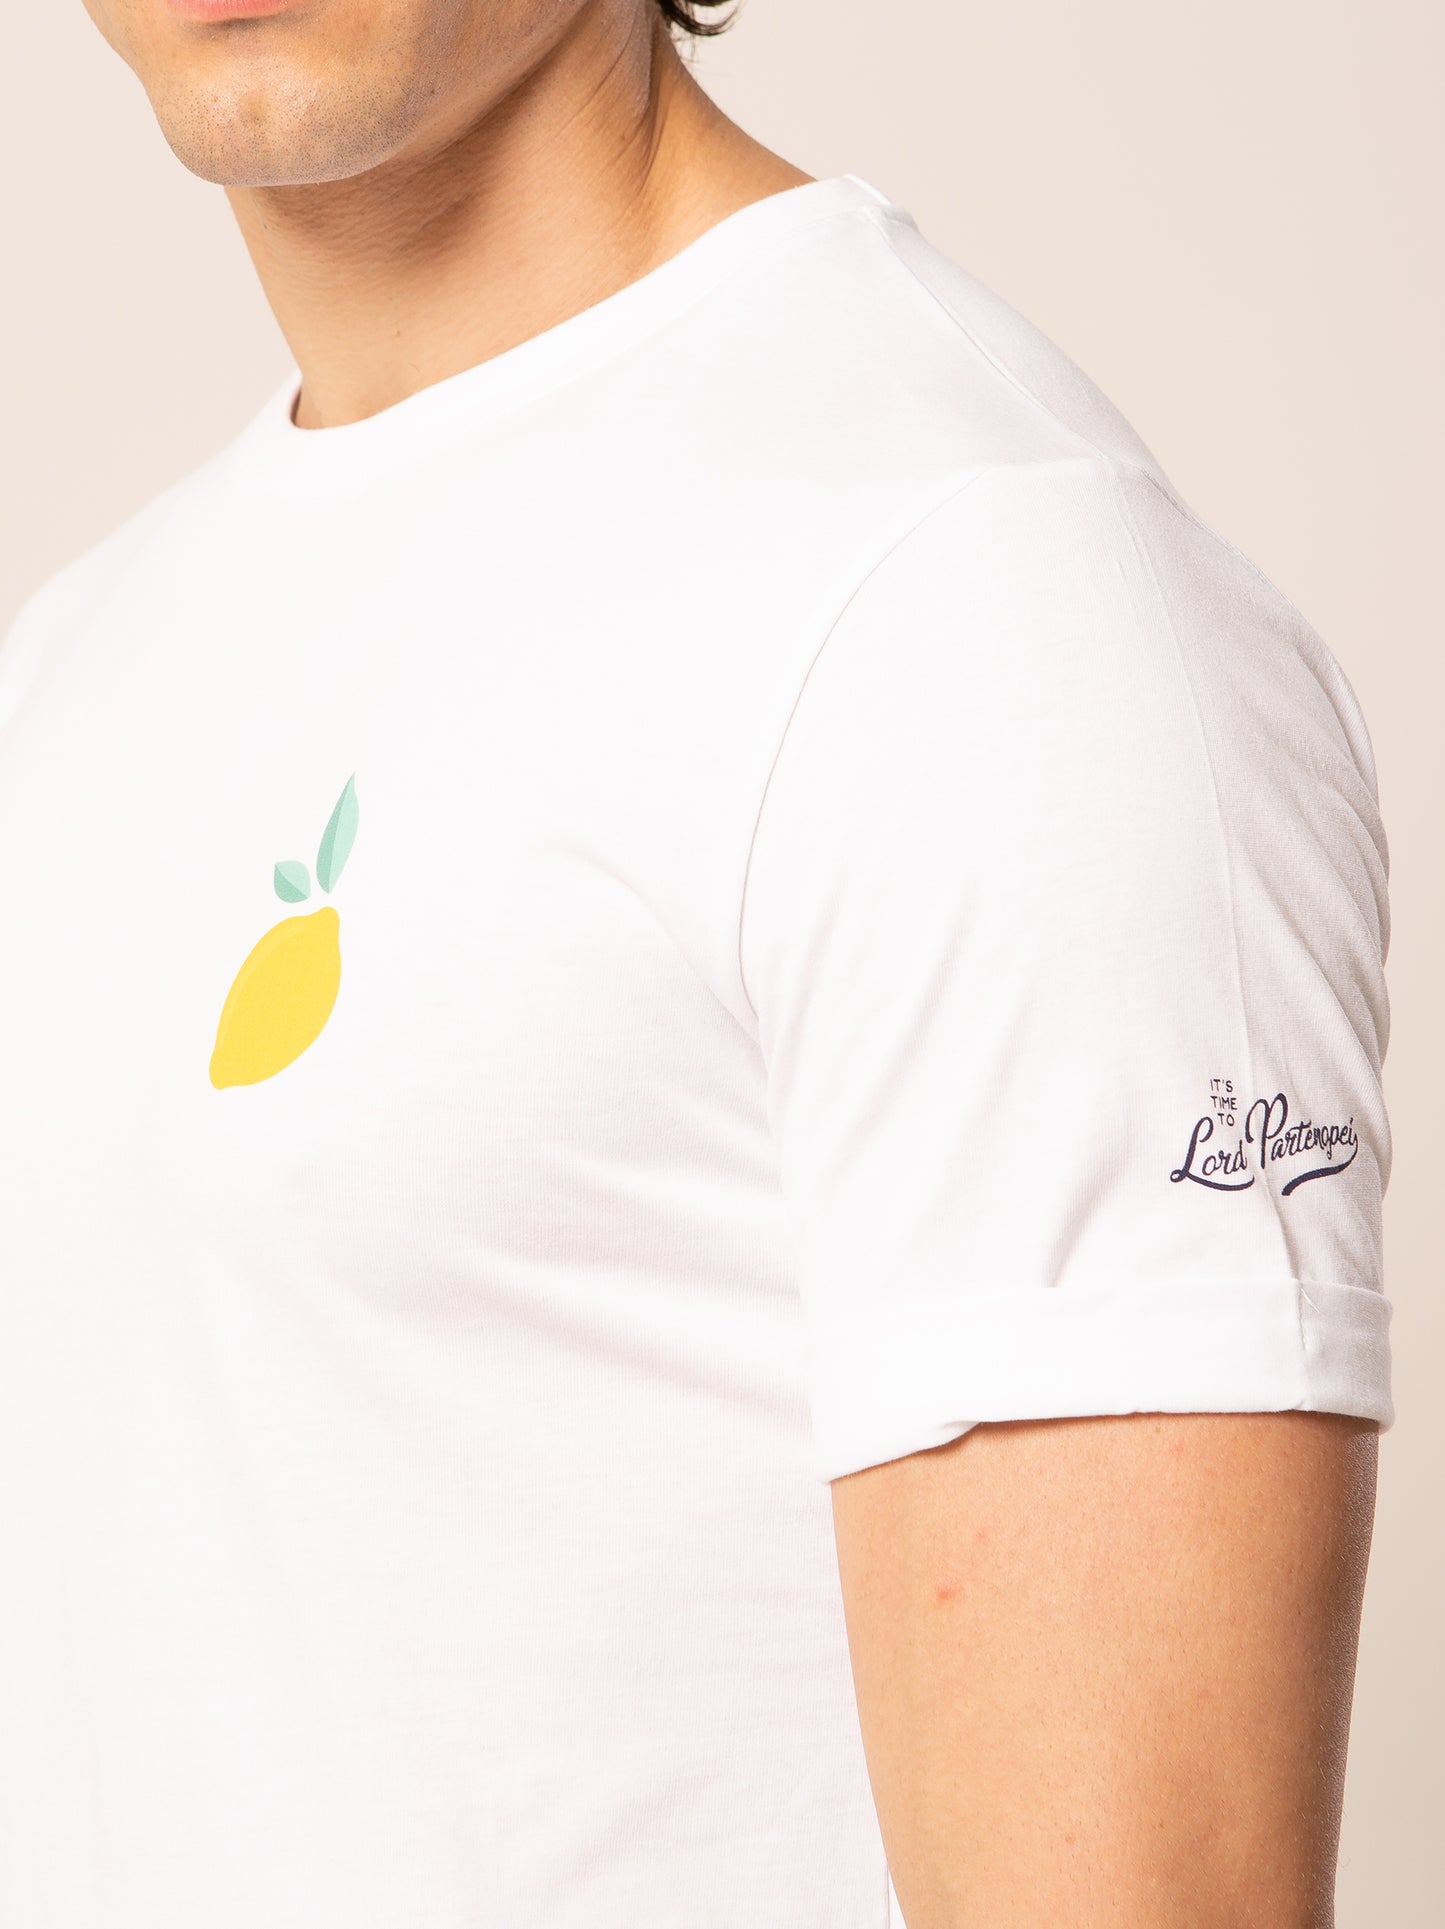 Lemon - T-shirt bianca fantasia limone